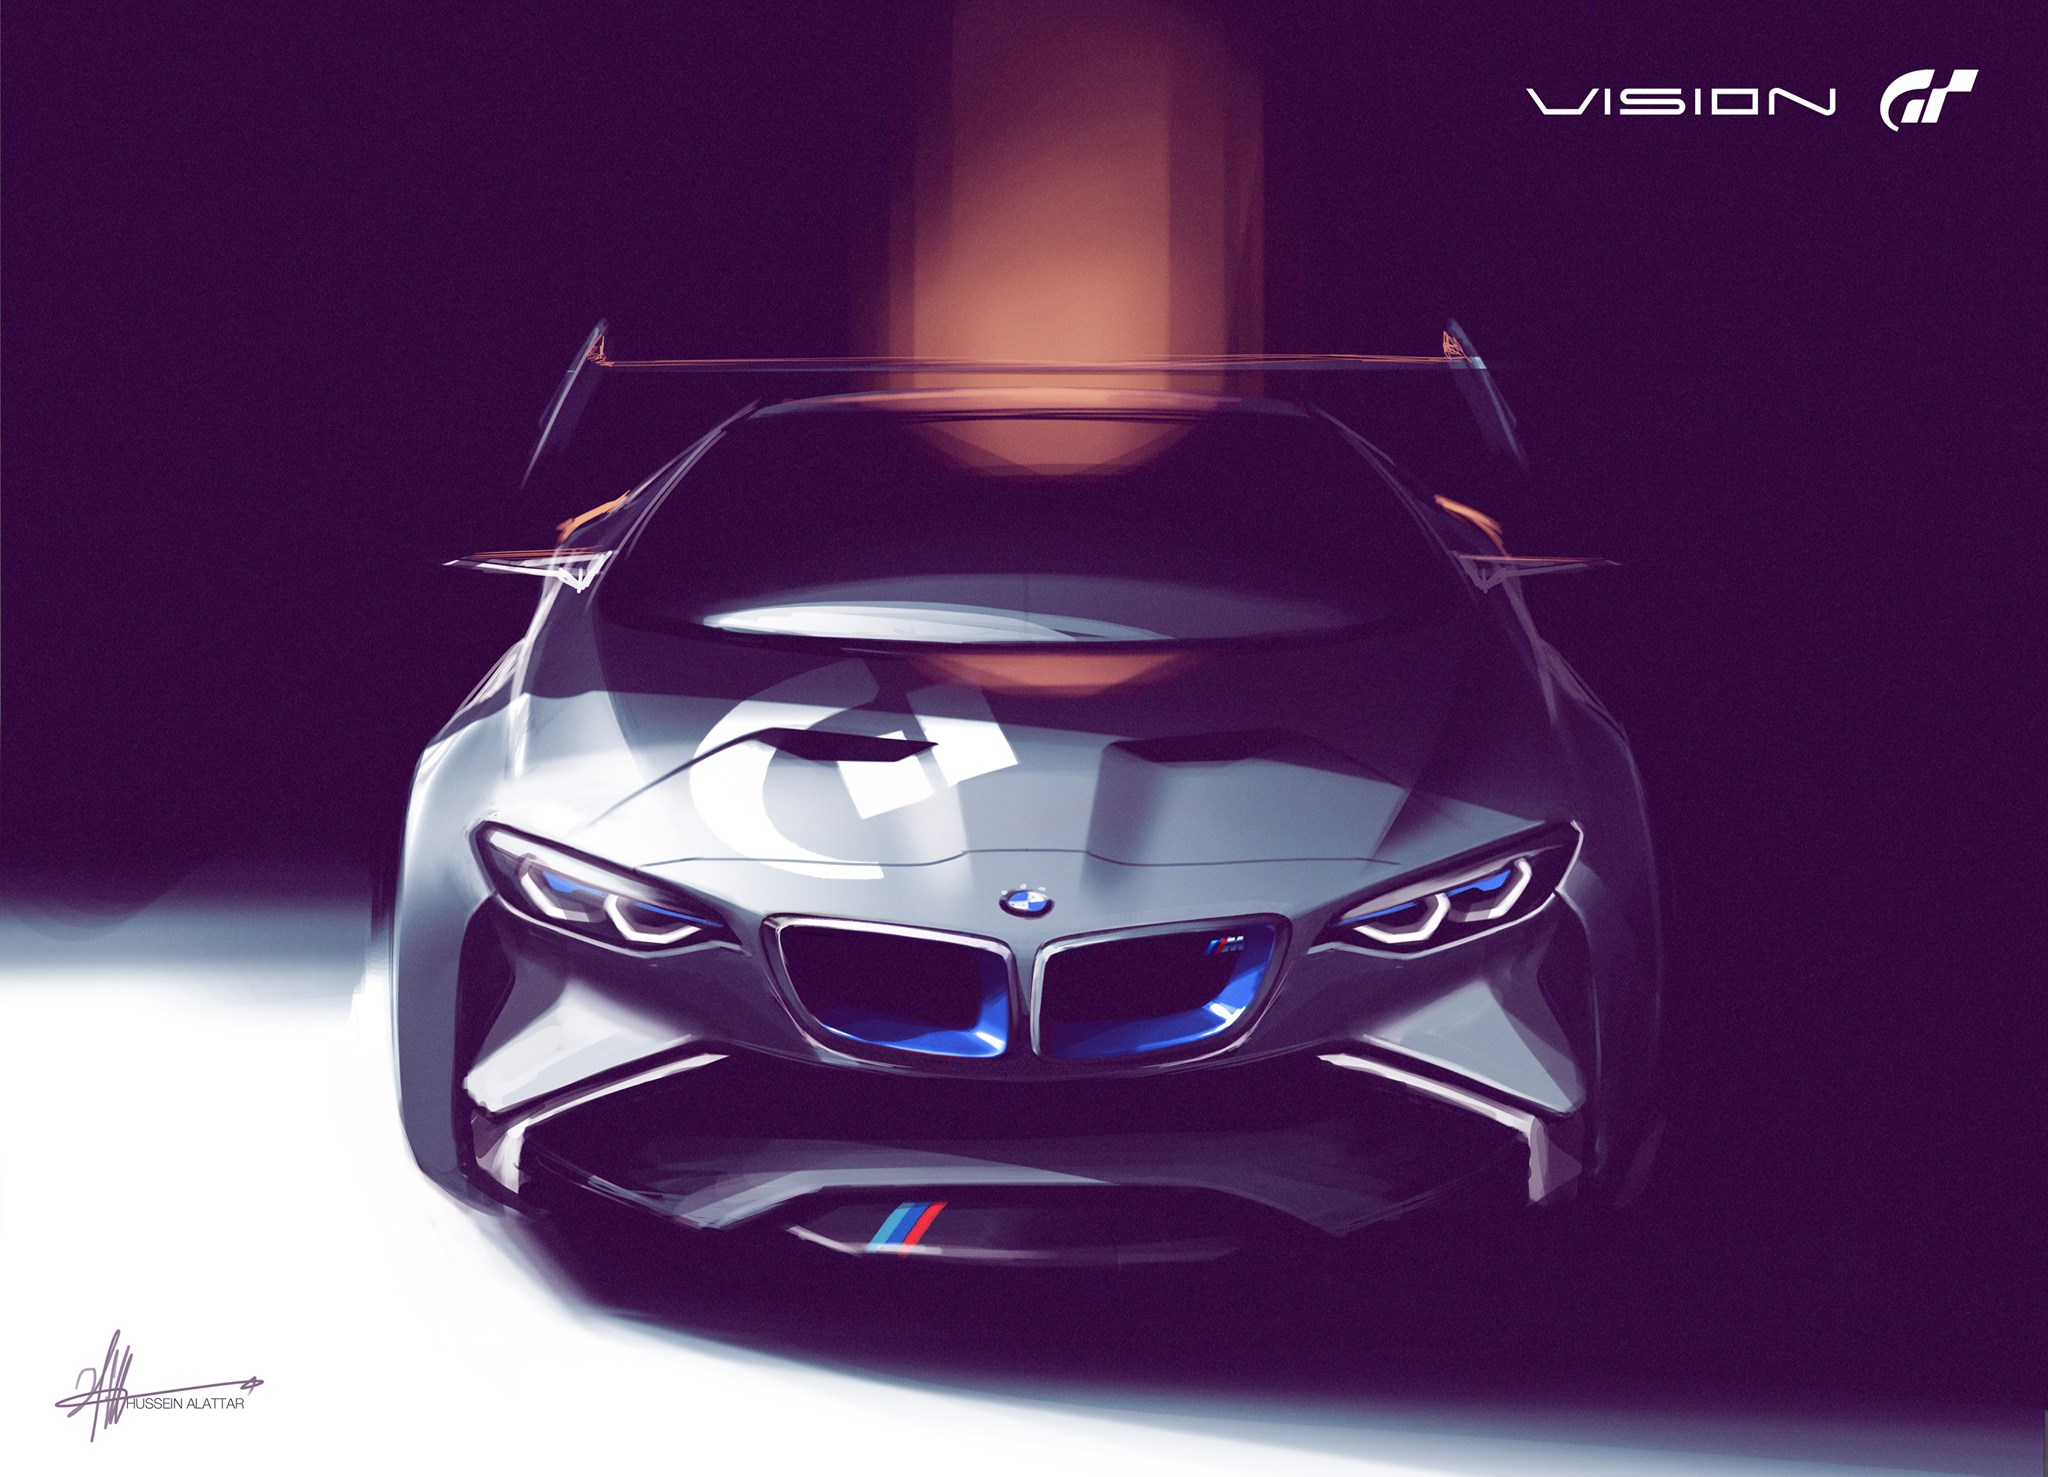 BMW-Vision-Gran-Turismo-2013-GT-6-Video-